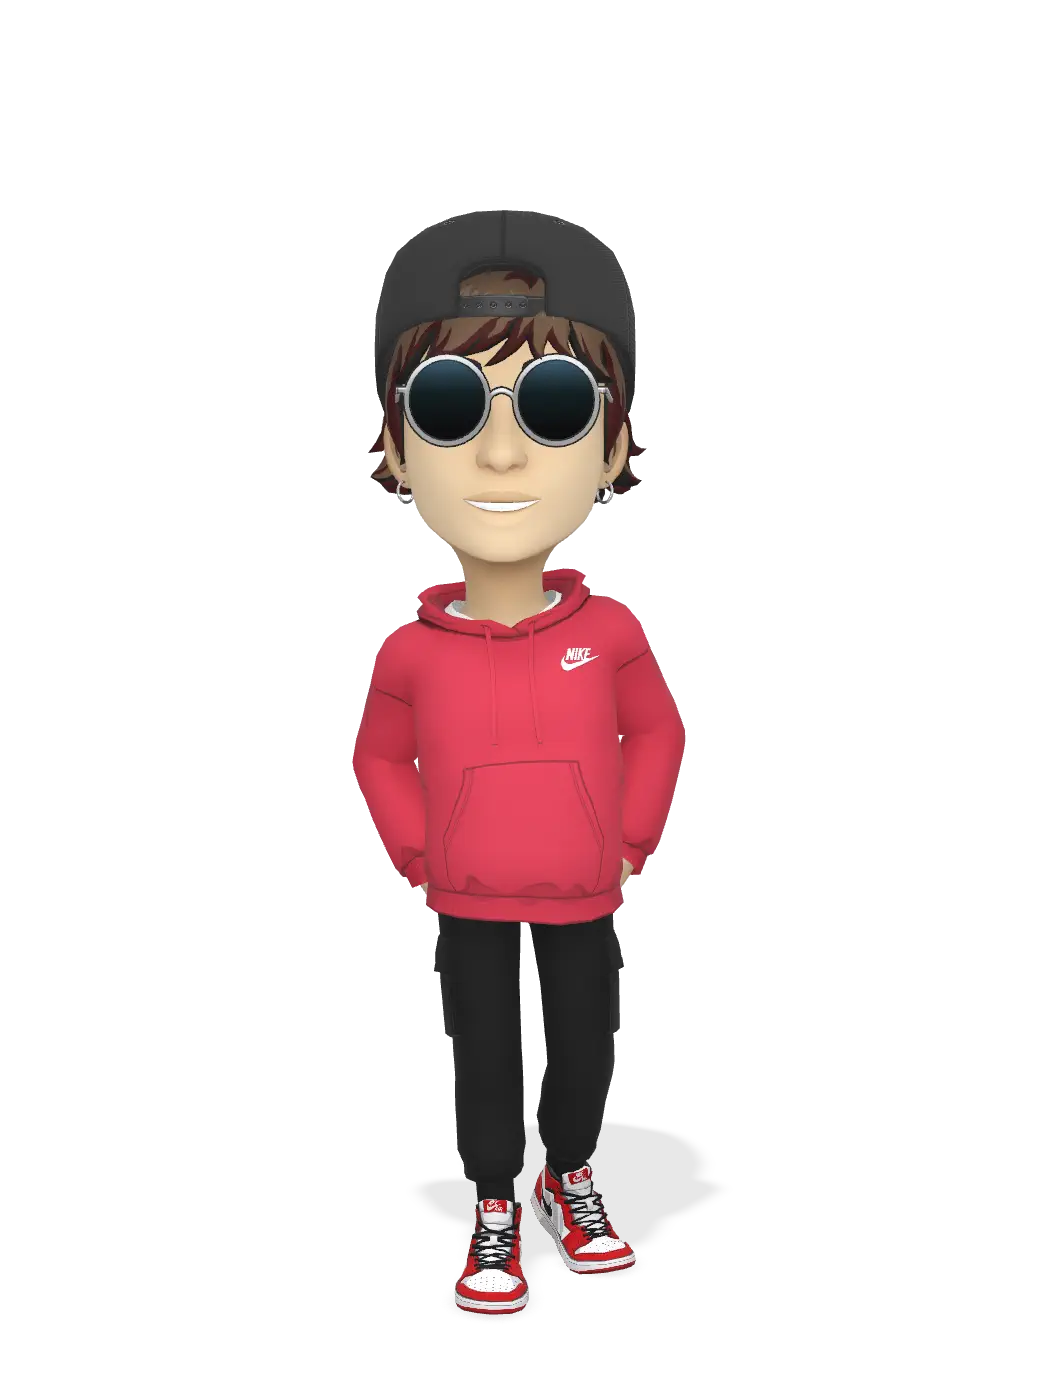 3D Bitmoji for theaustinporter avatar